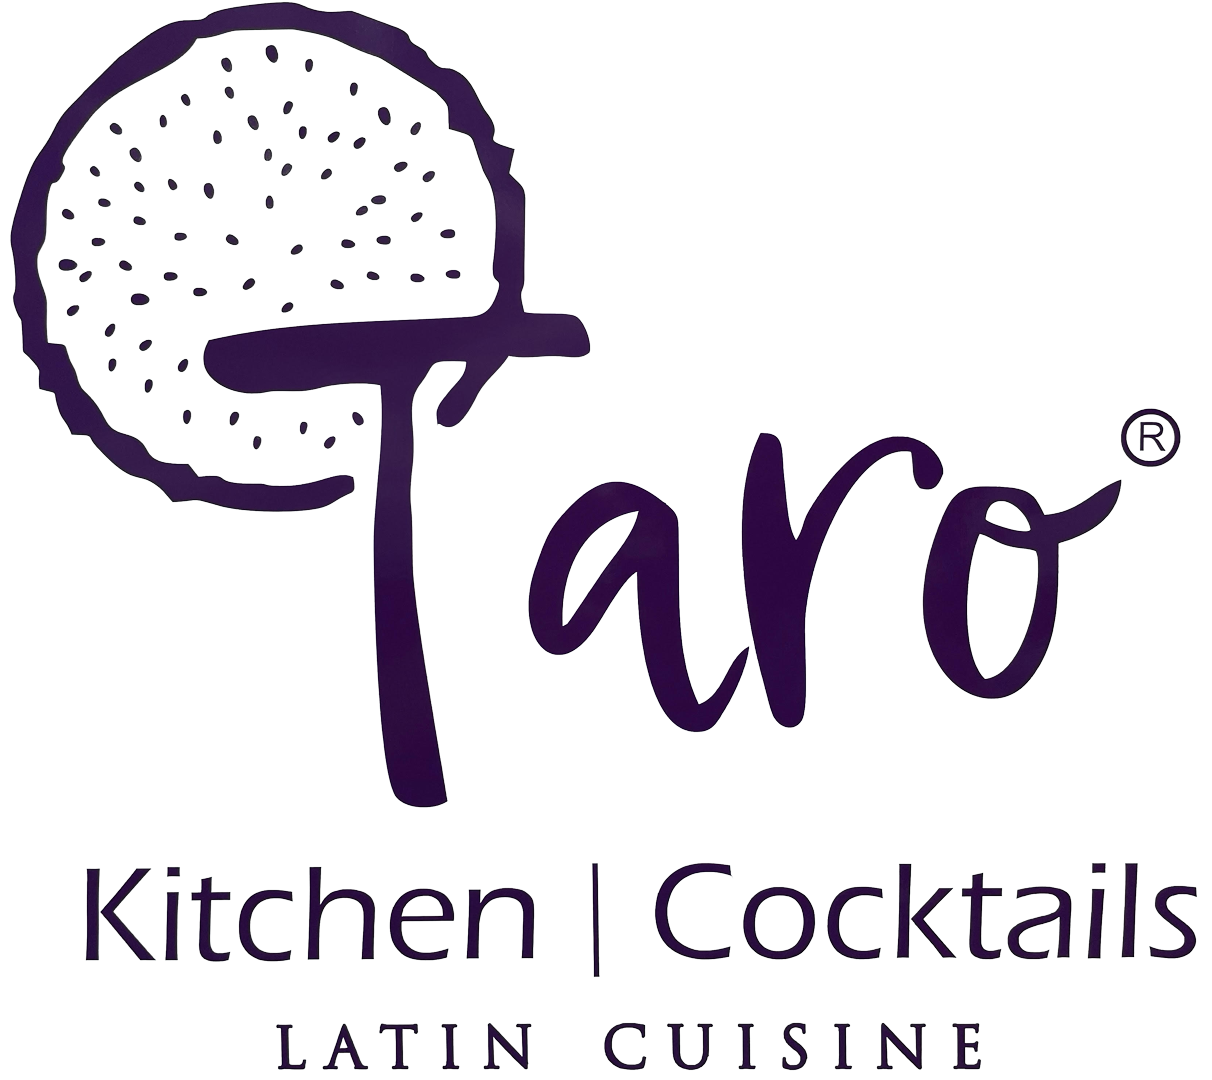 Taro Kitchen and Cocktails Latin Cuisine logo scroll